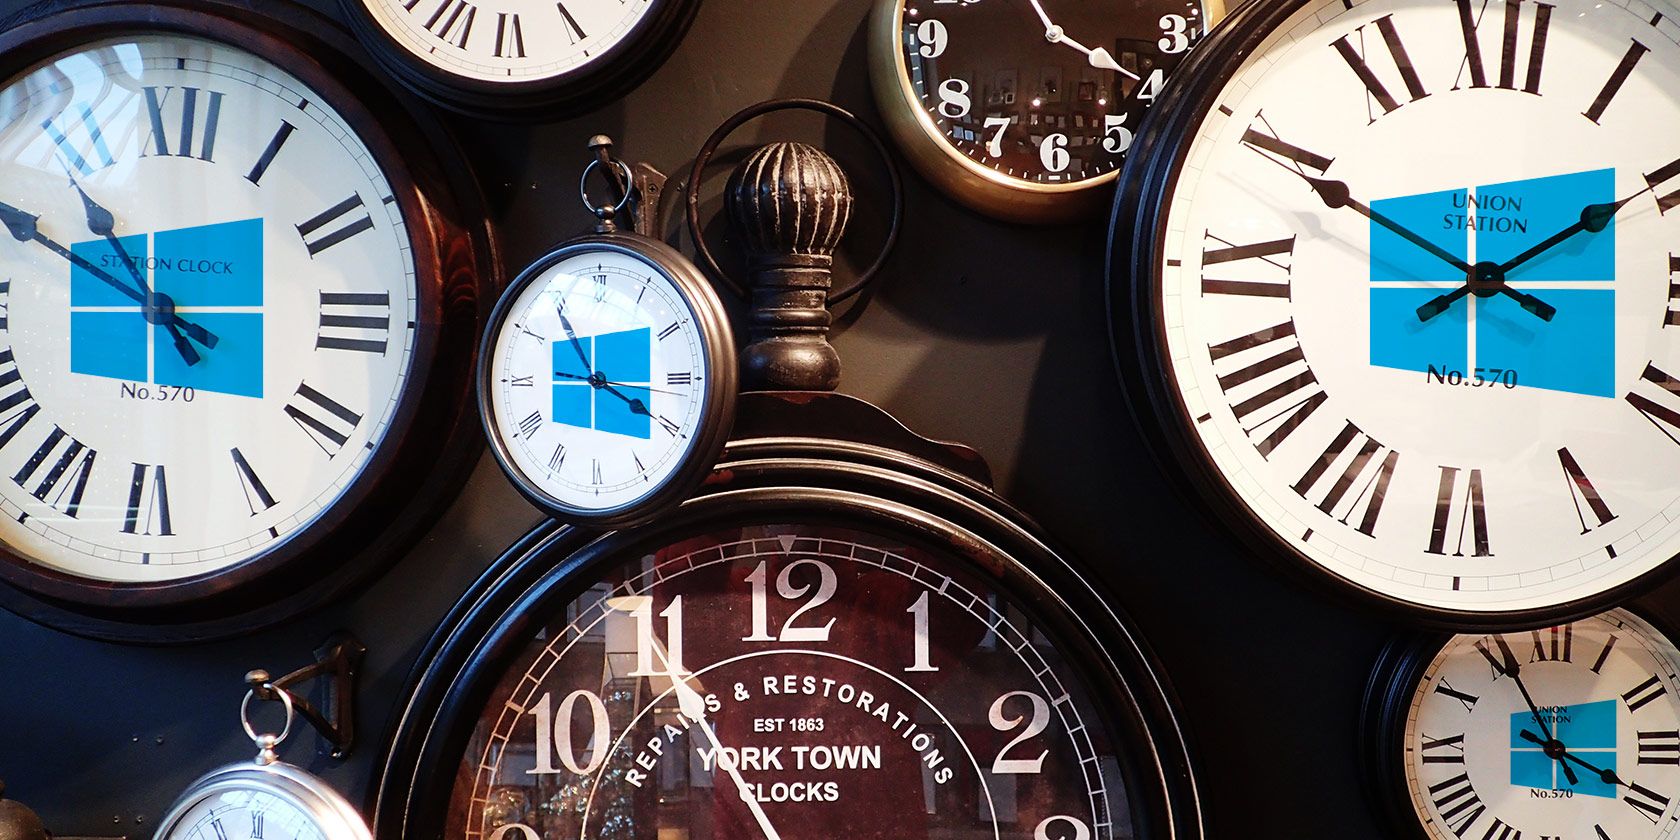 Various clocks showing the Windows logo inside them